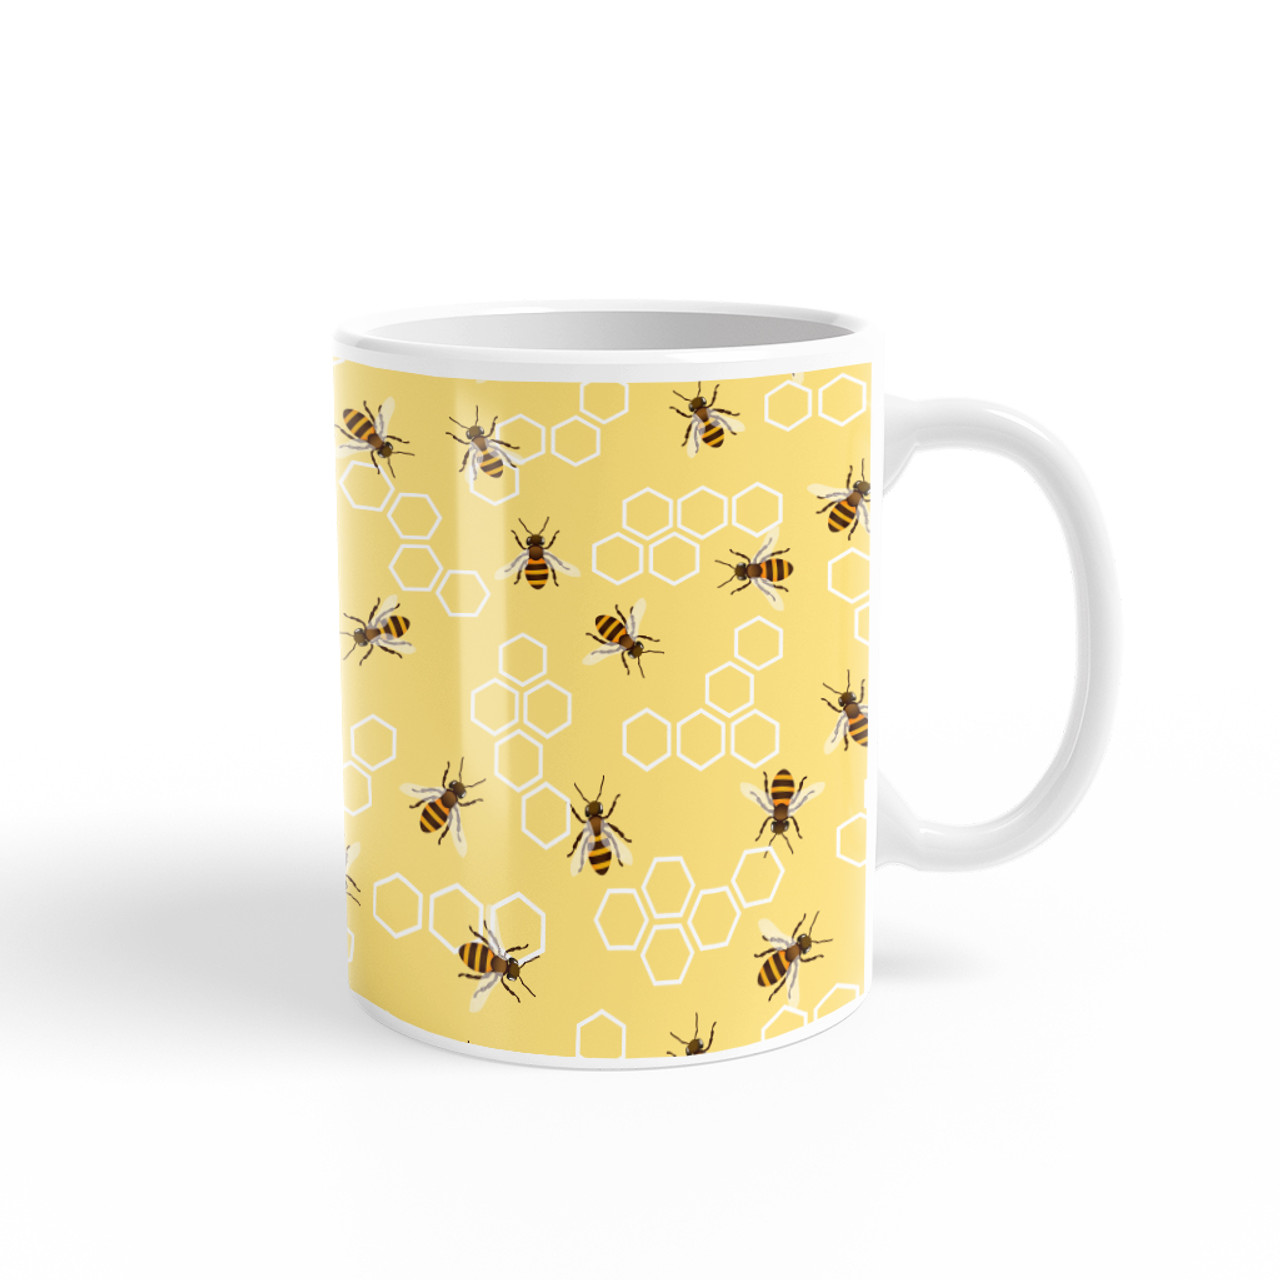 Bee Mug, Coaster, Towel, Honey Gift Set